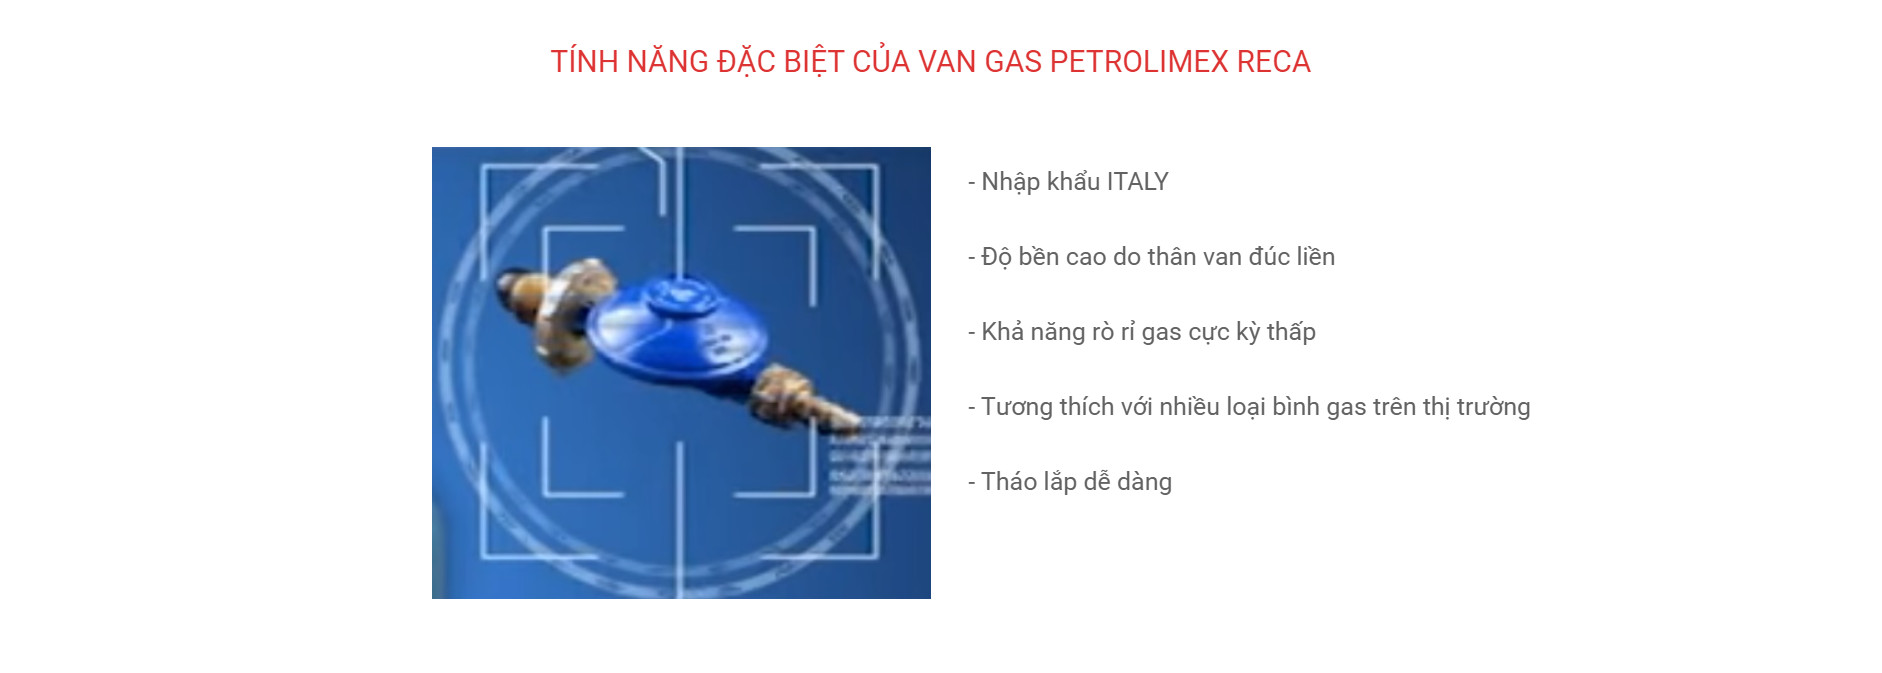 Van gas Reca - Italy